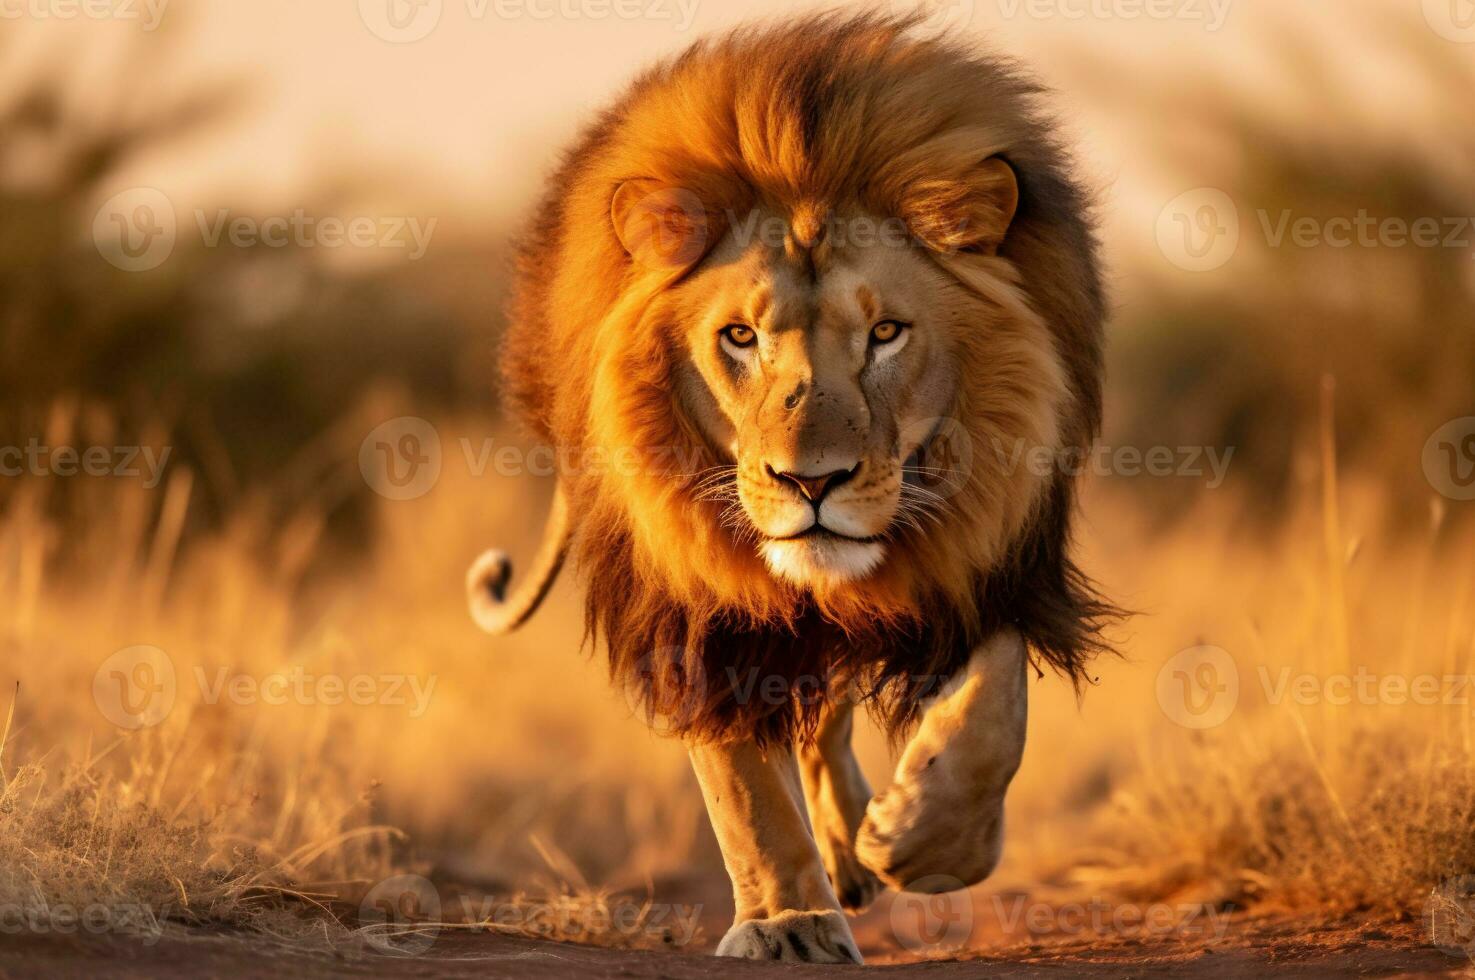 adulto masculino leão corrida dentro a africano savana durante a dourado hora do a dia. ai gerado foto